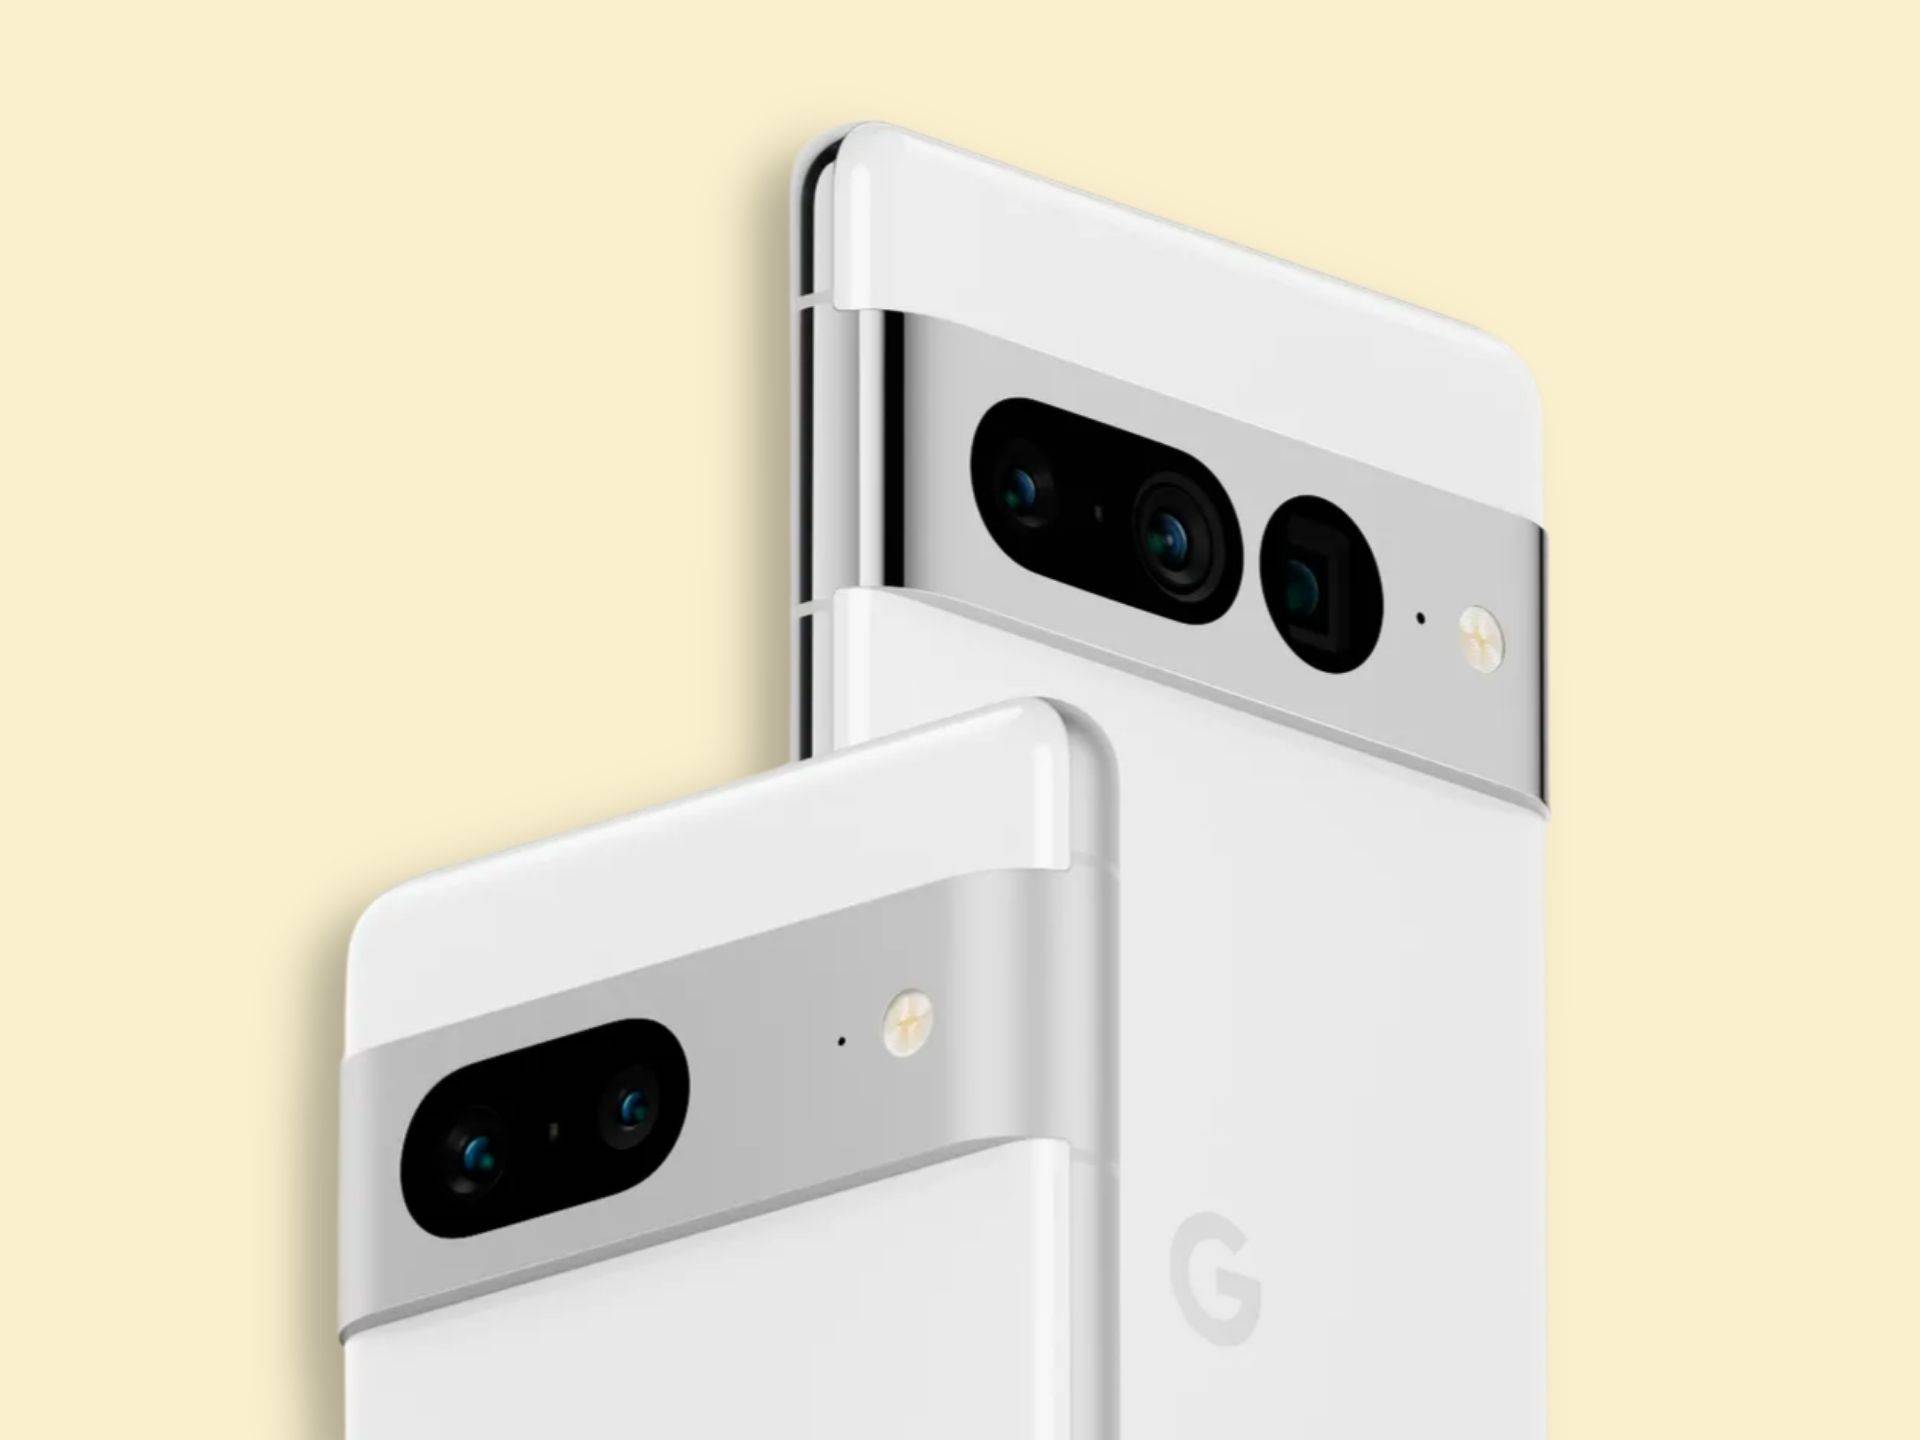 Google Pixel 7 and Google Pixel 7 Pro